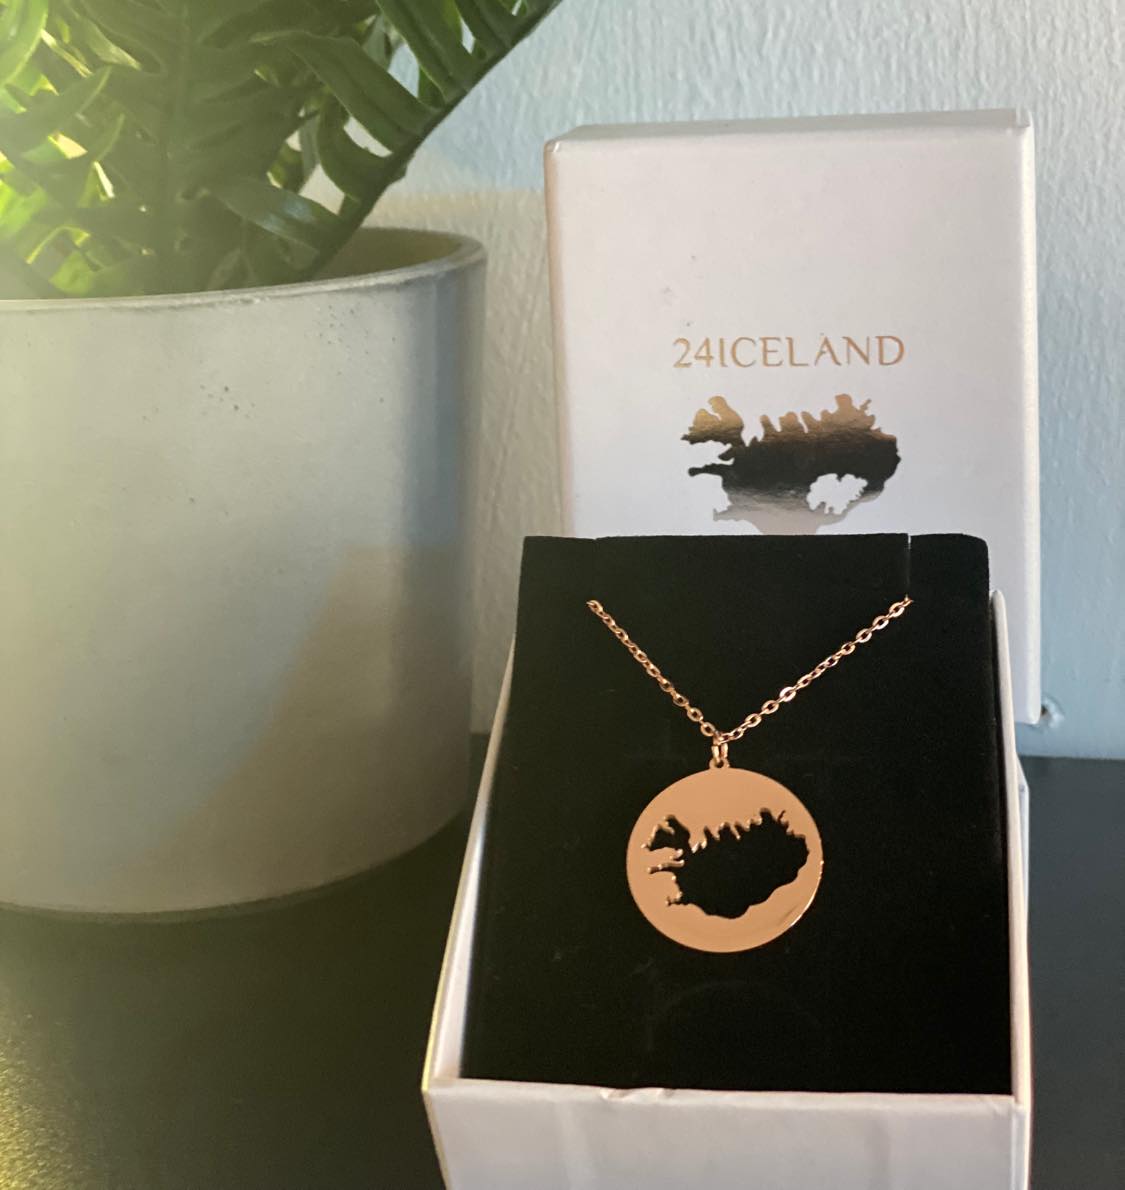 Round Iceland necklace